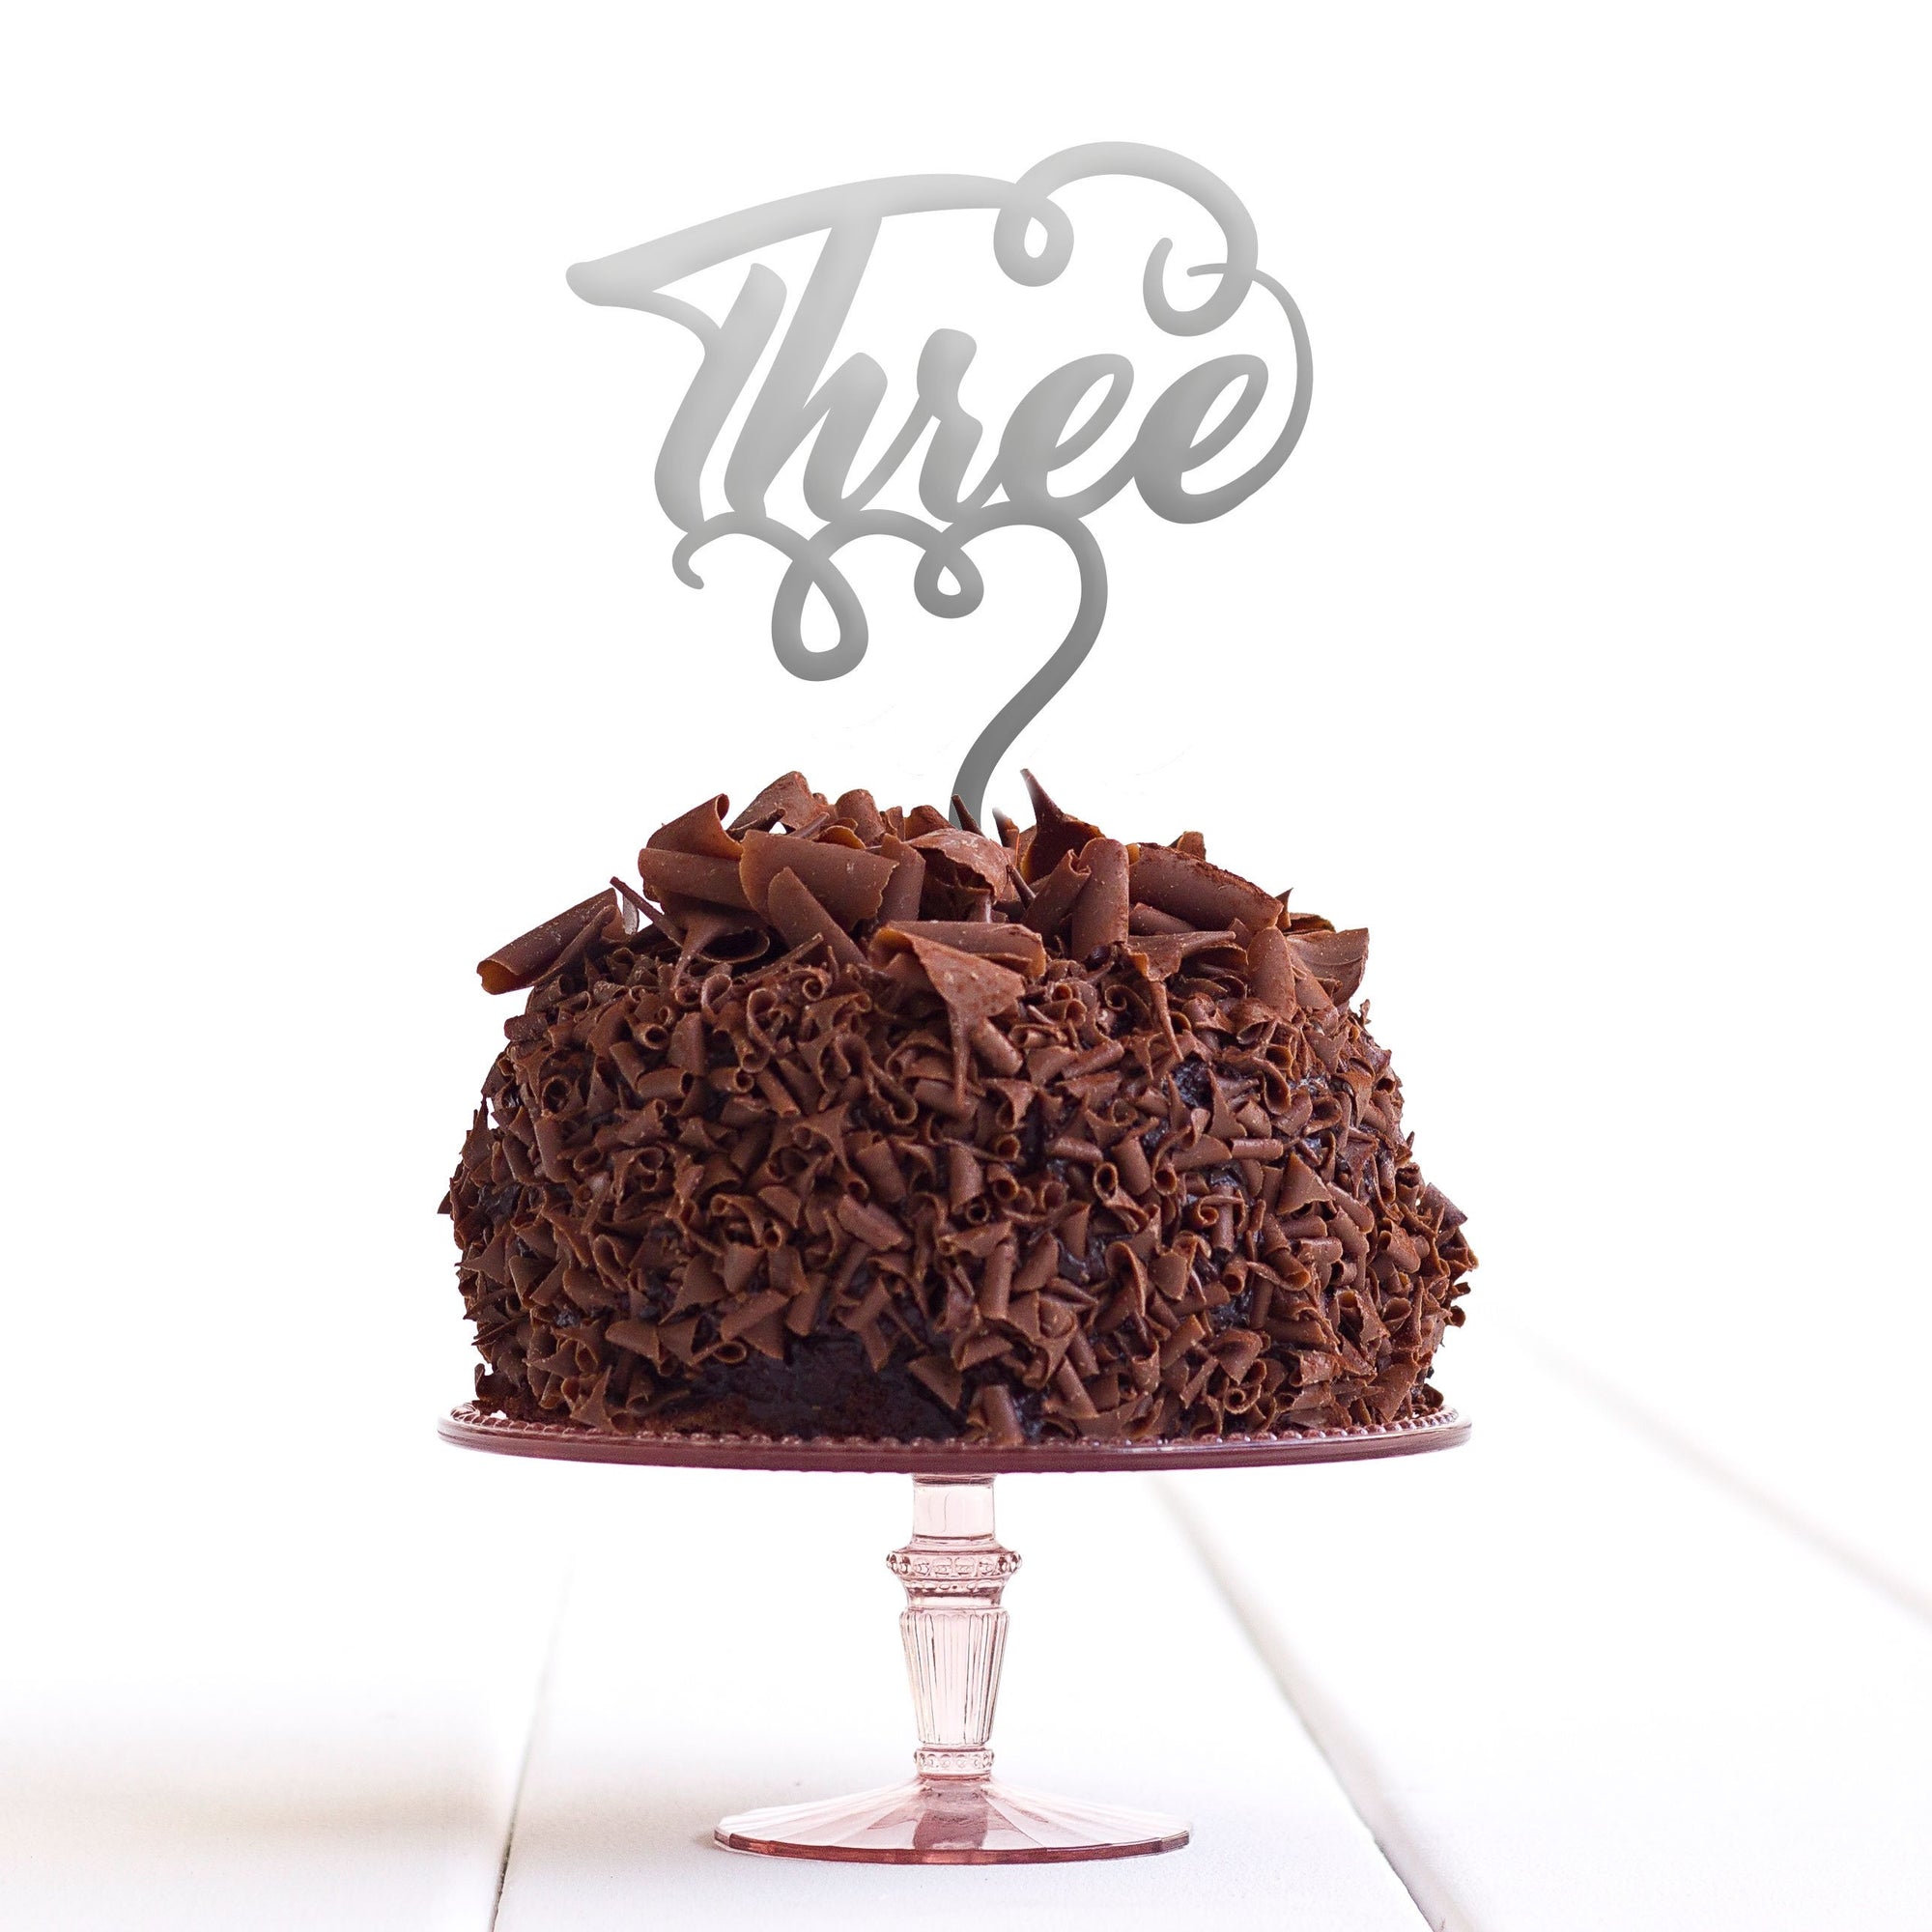 Cake for third birthday stock image. Image of birthday - 104162815